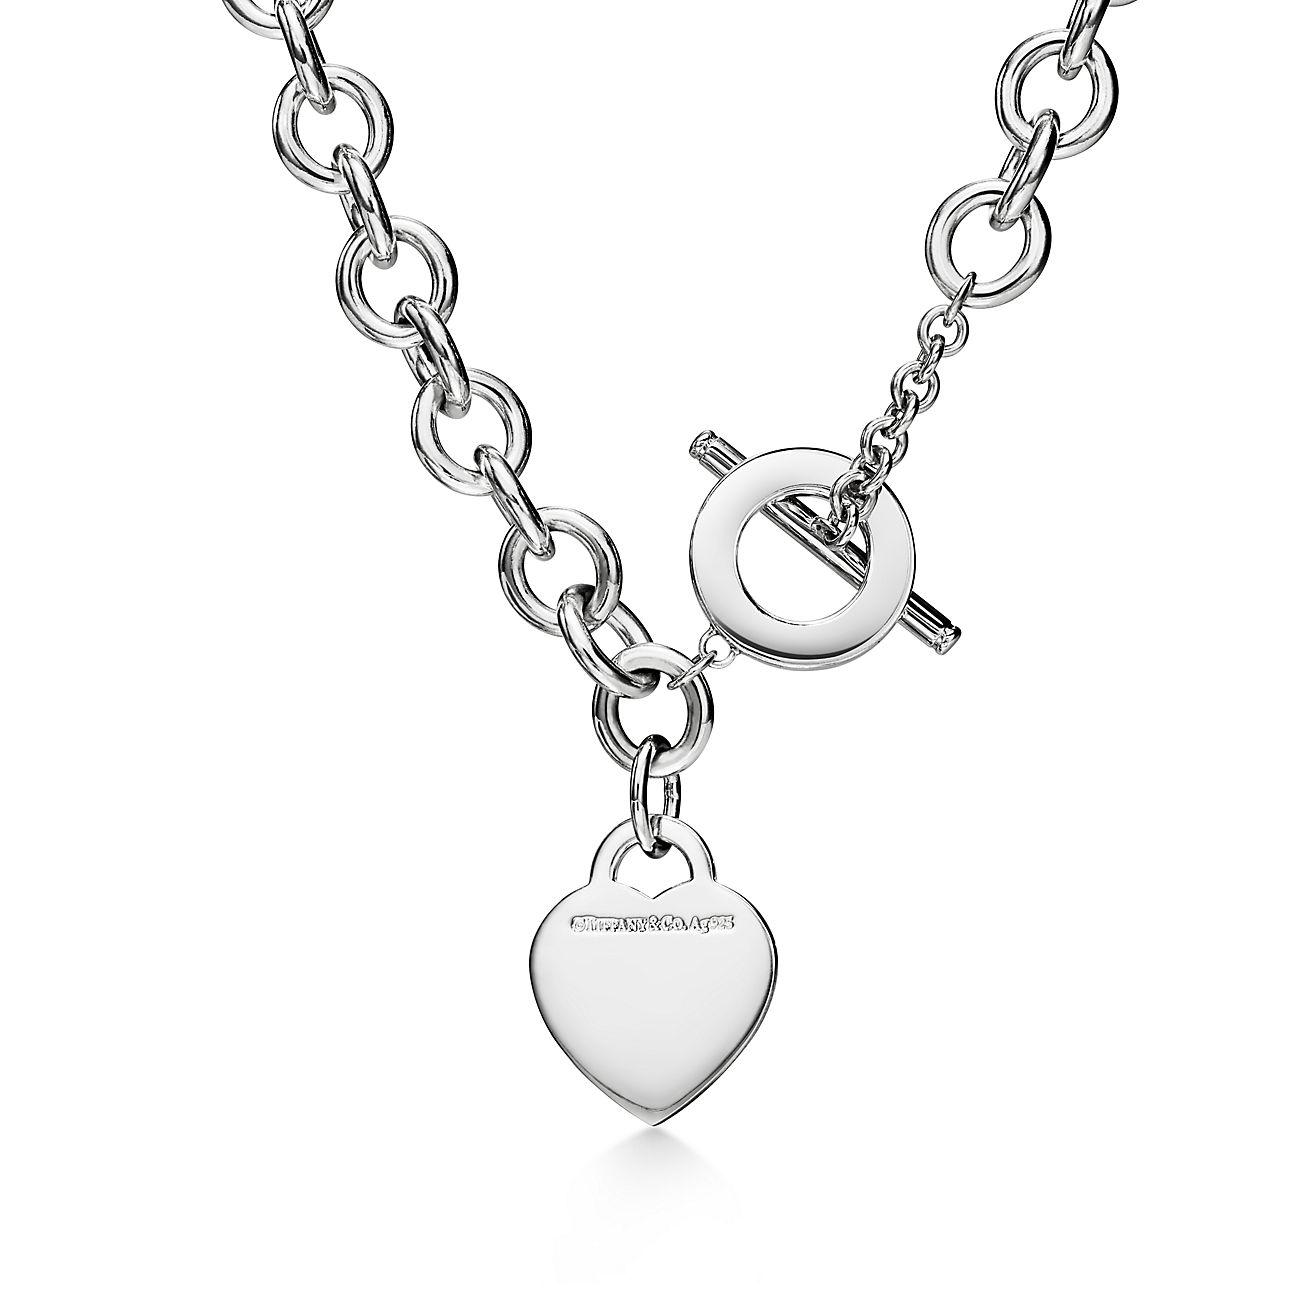 Tiffany & Co. 21 Station Hinged Diamond Necklace by Tiffany & Co